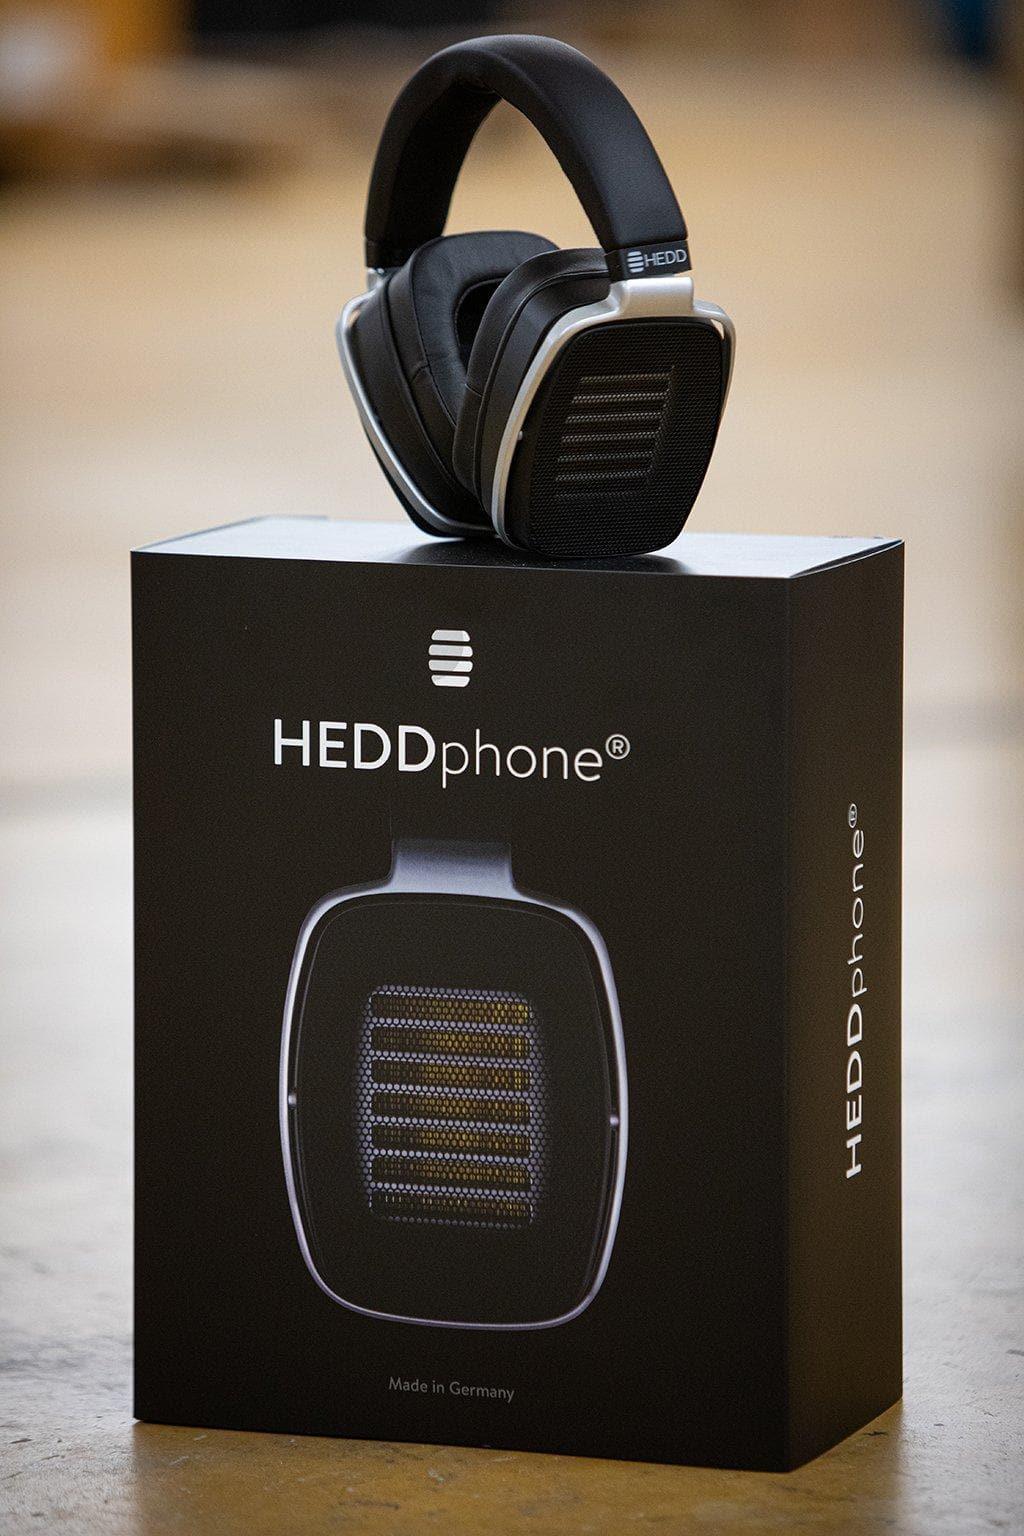 HEDDphone Headphones HEDD Audio 